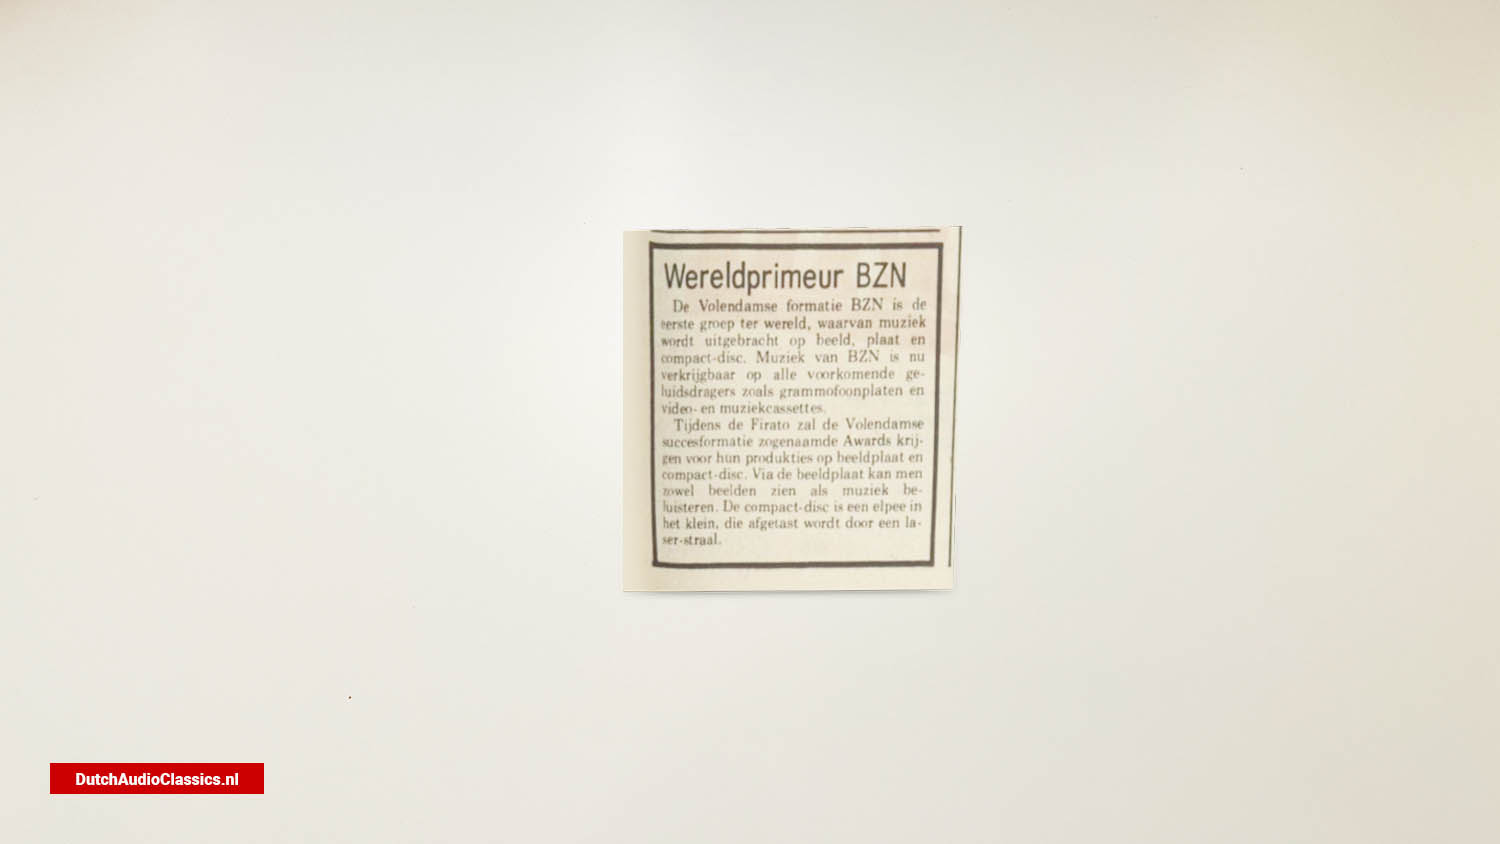 newspaper article World premiere BZN